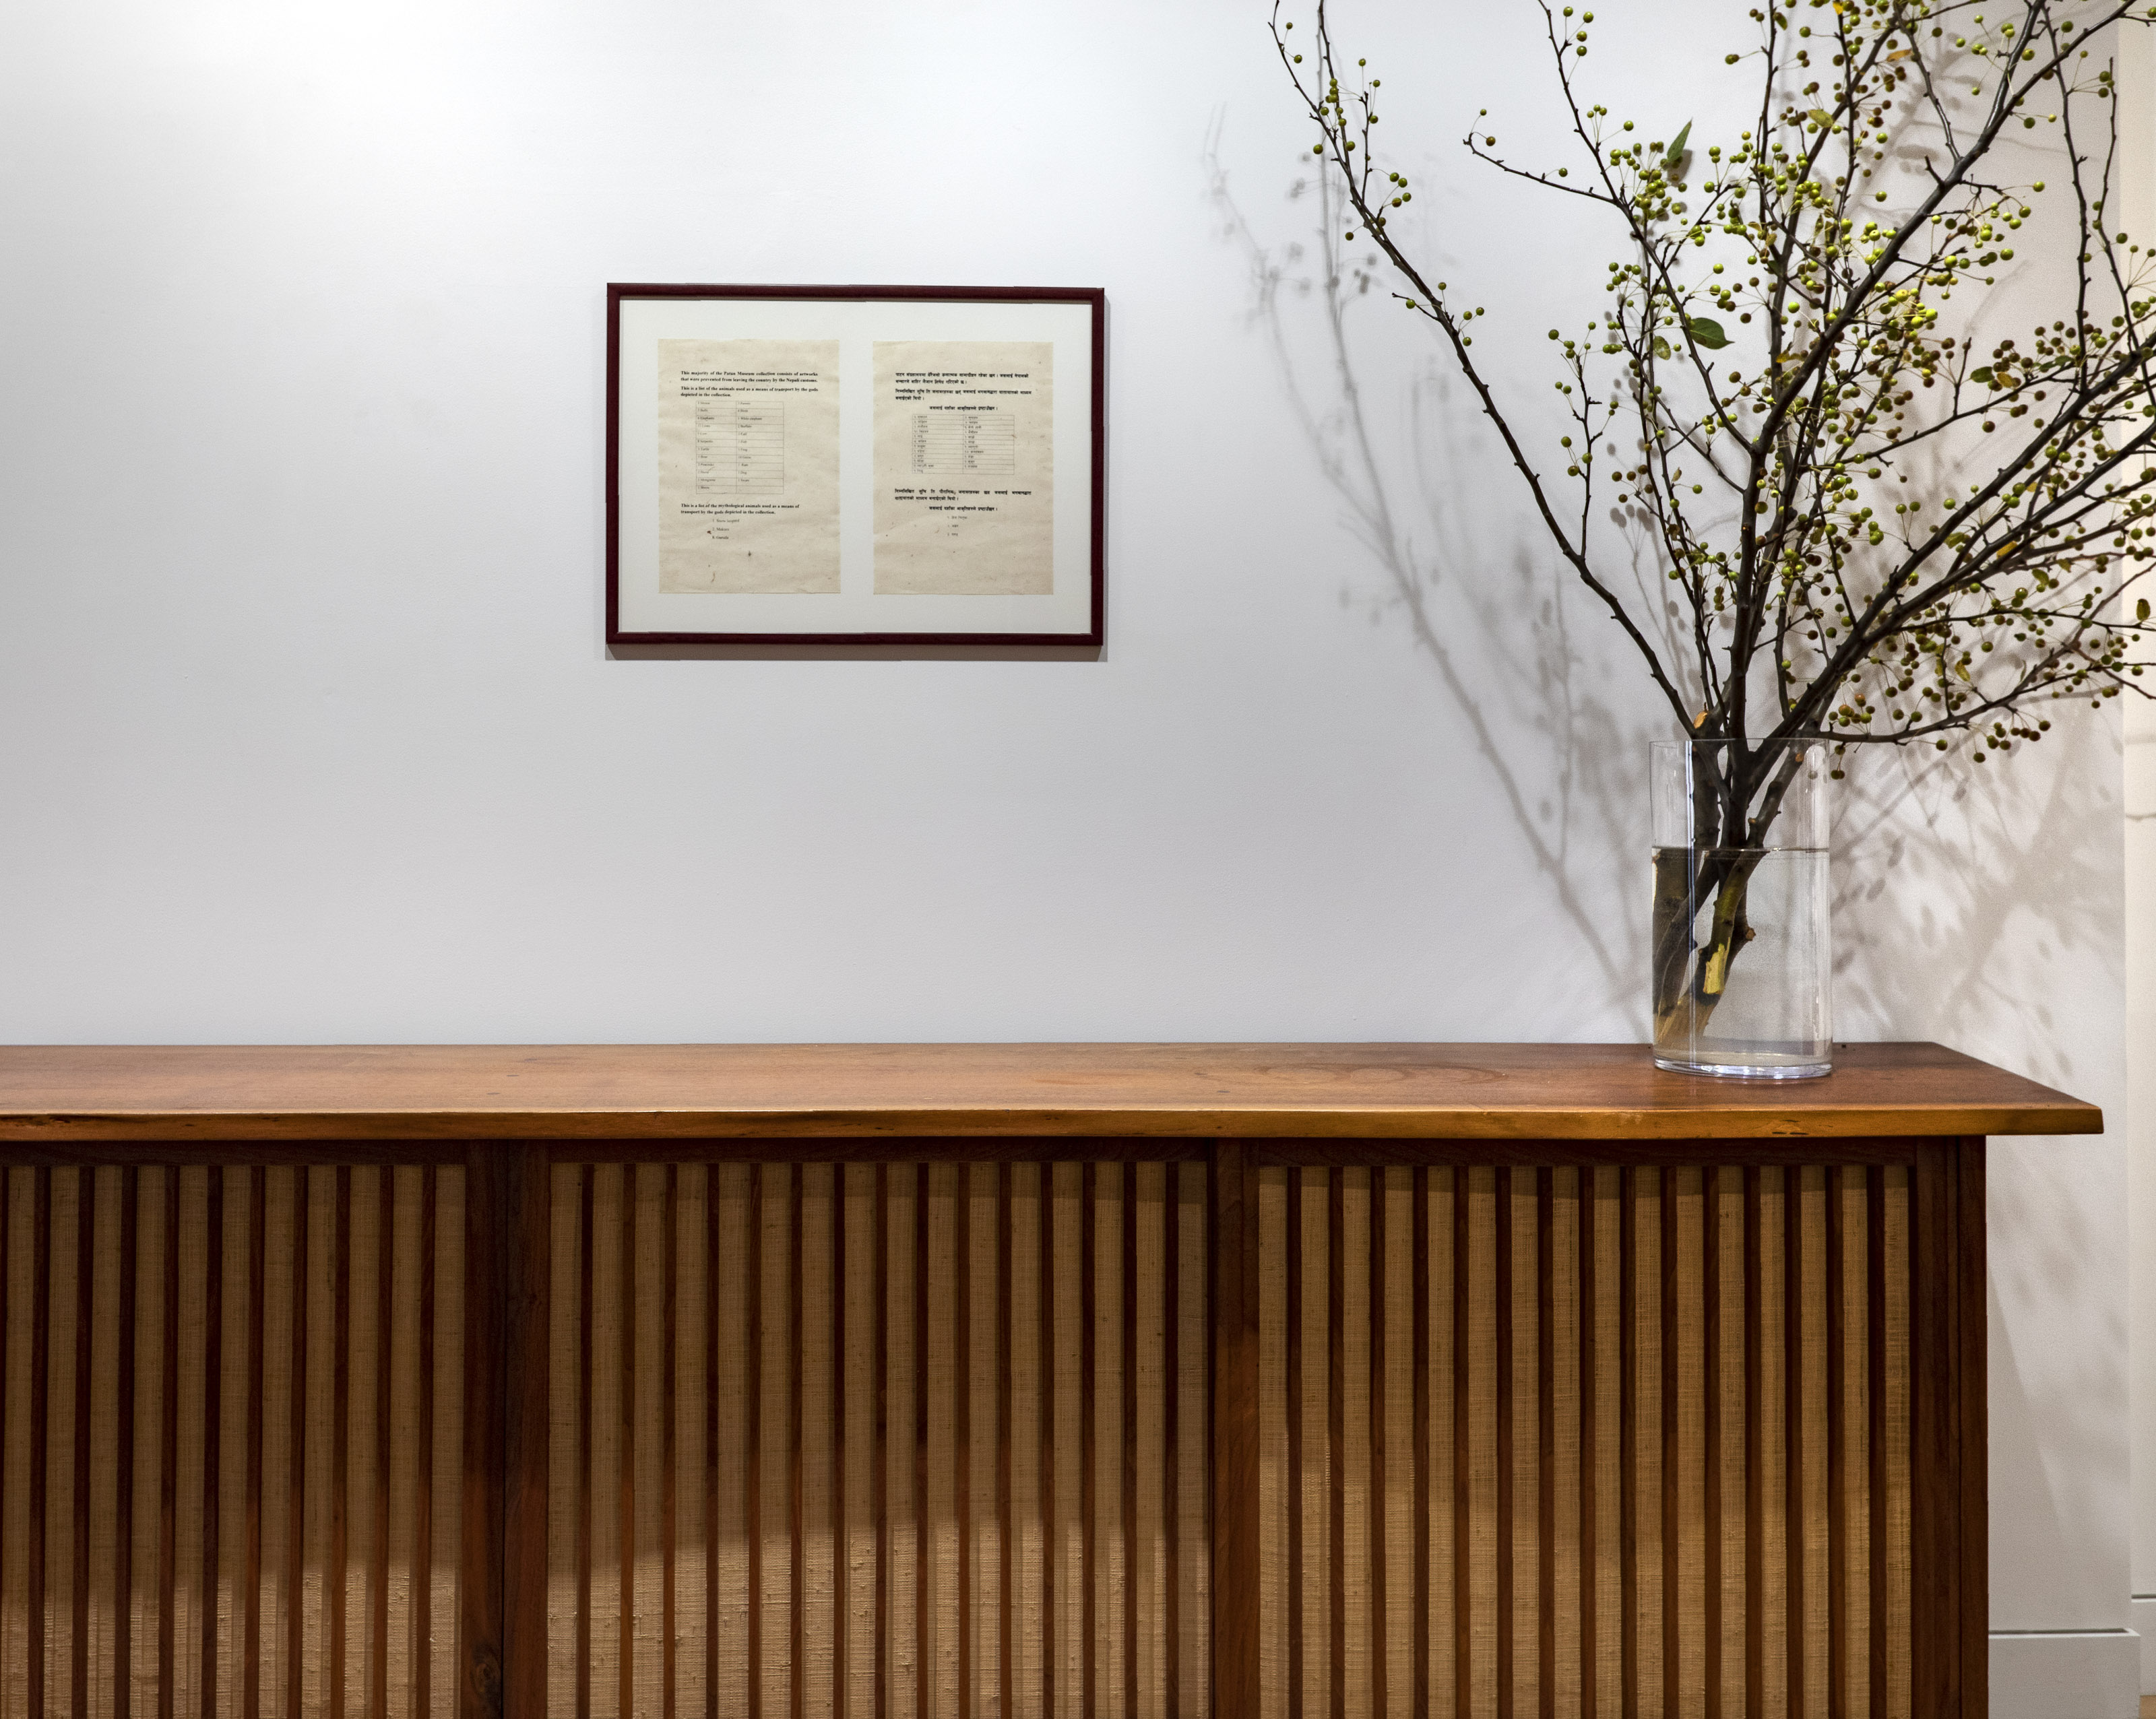 Installation view, Kasper Bosmans: <i>Four</i>, at Gladstone 64, New York, 2020